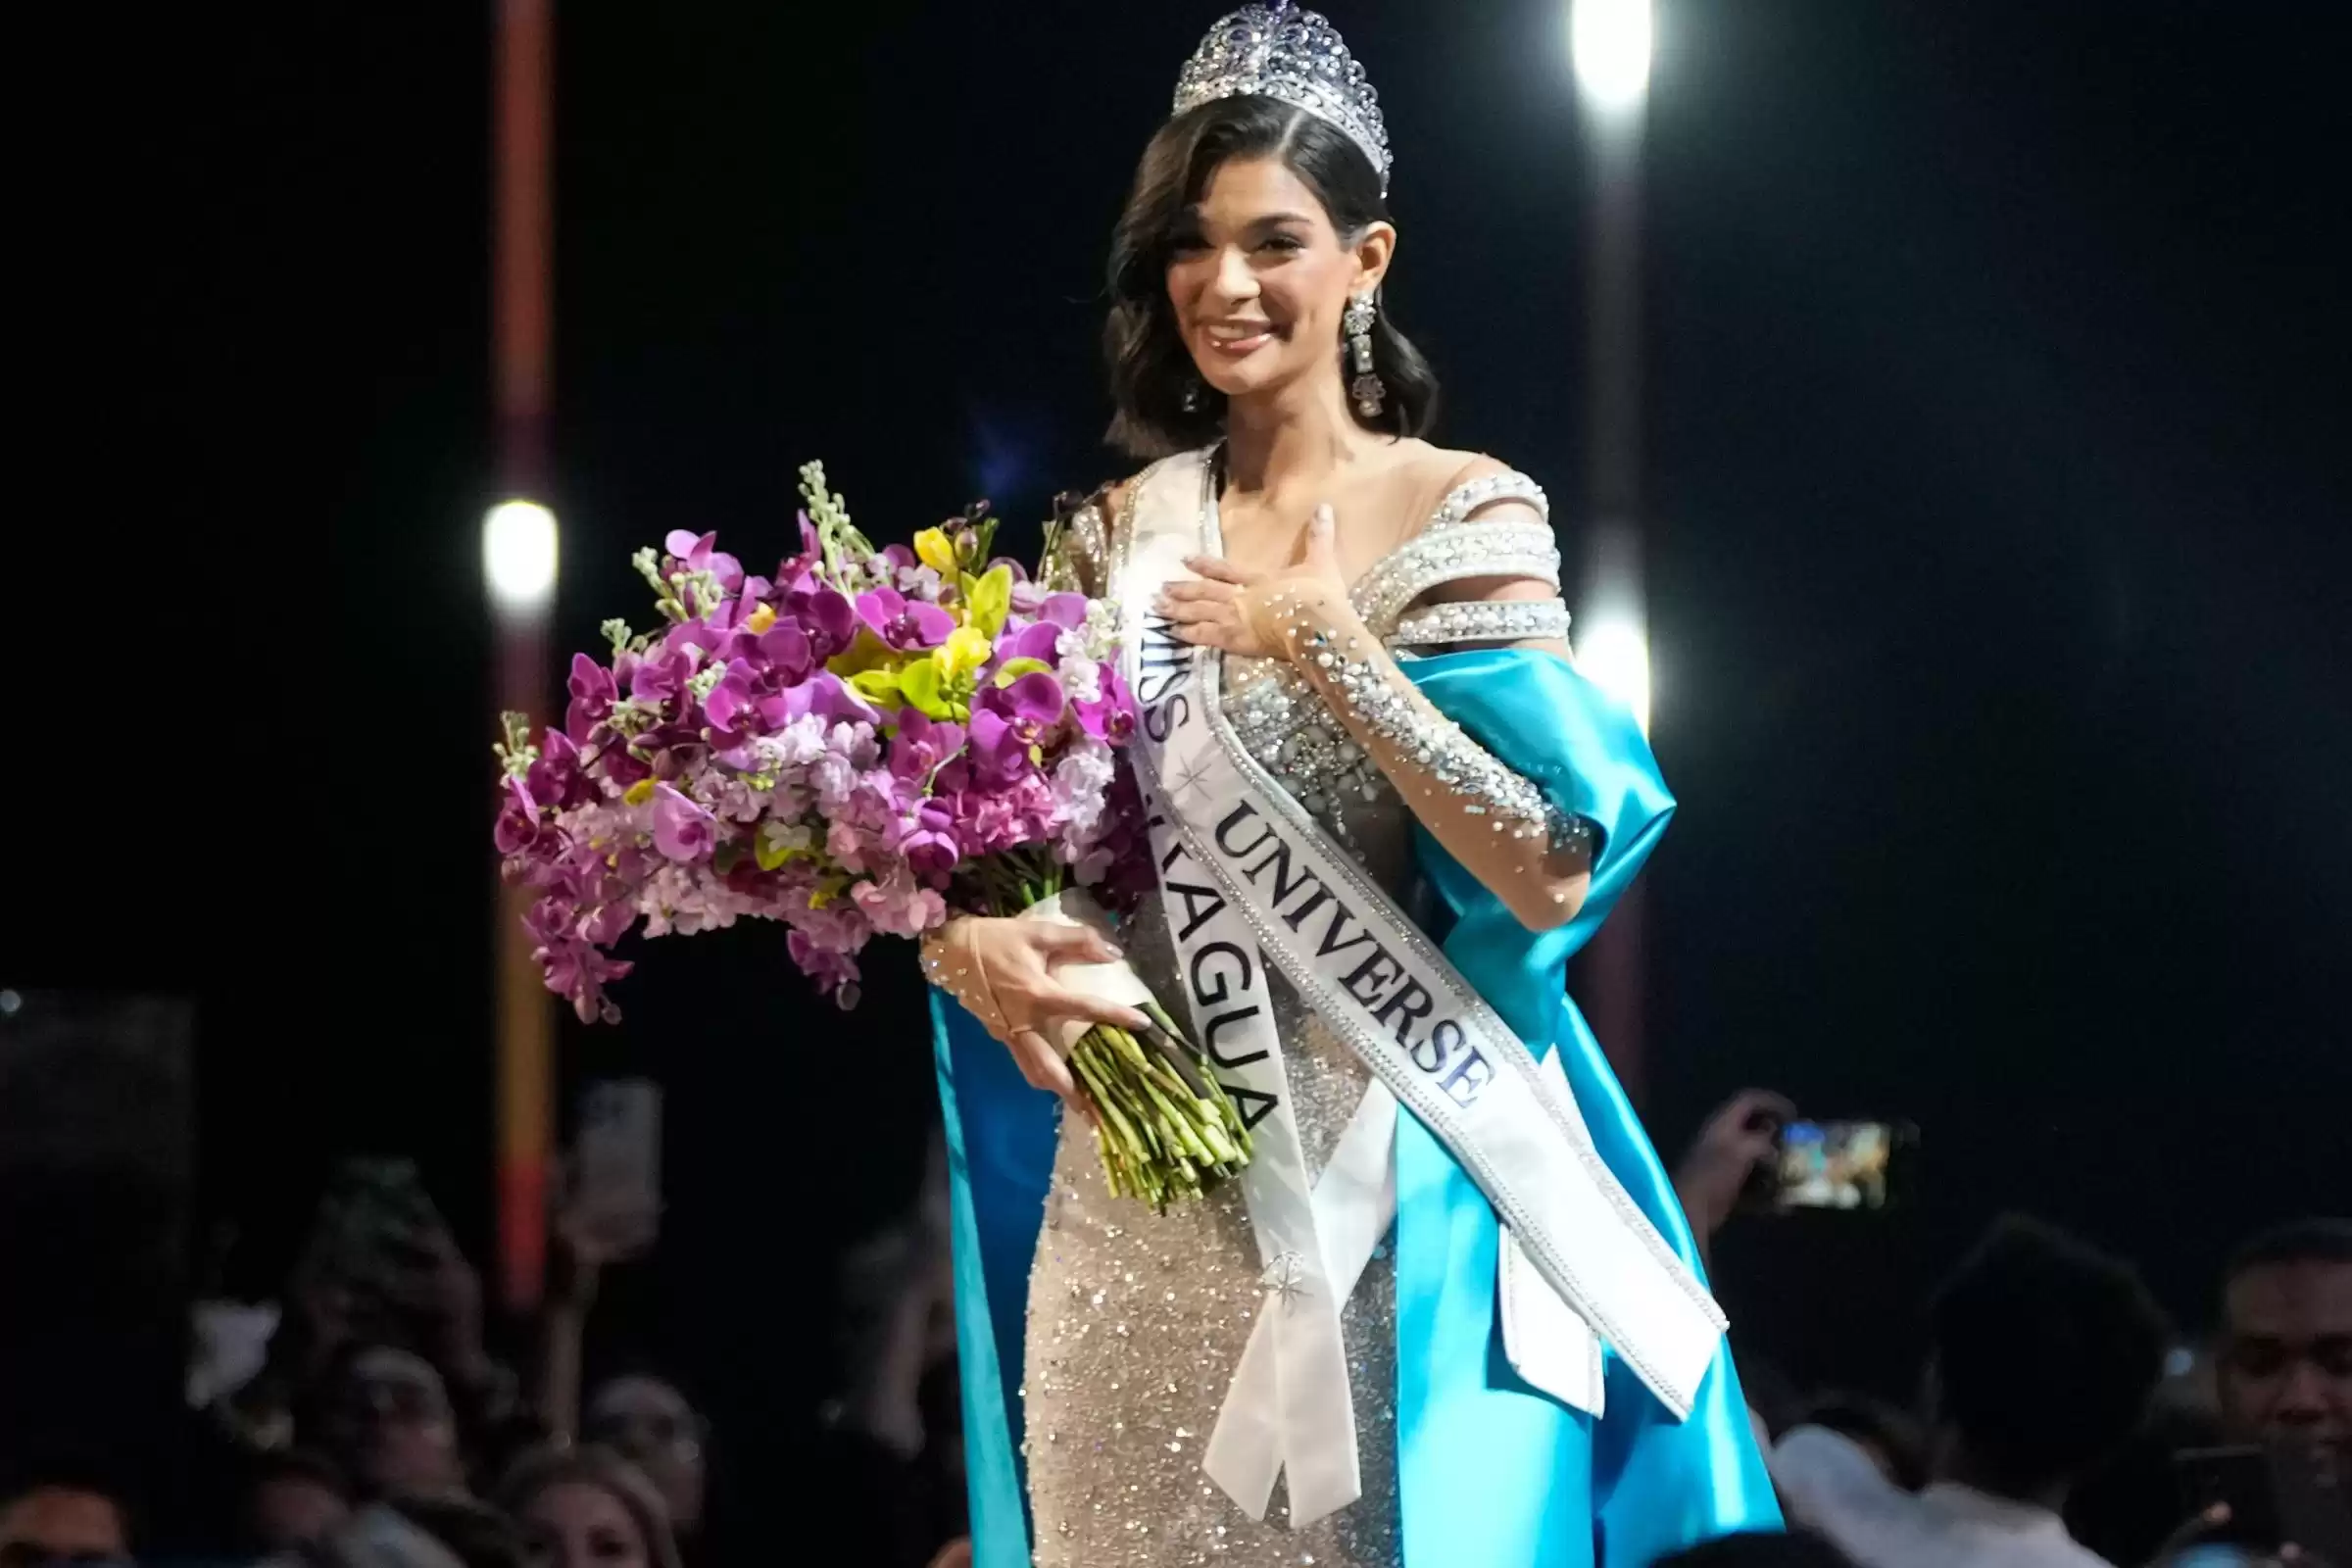 Miss Nicaragua Sheynnis Palacios wins Miss Universe crown